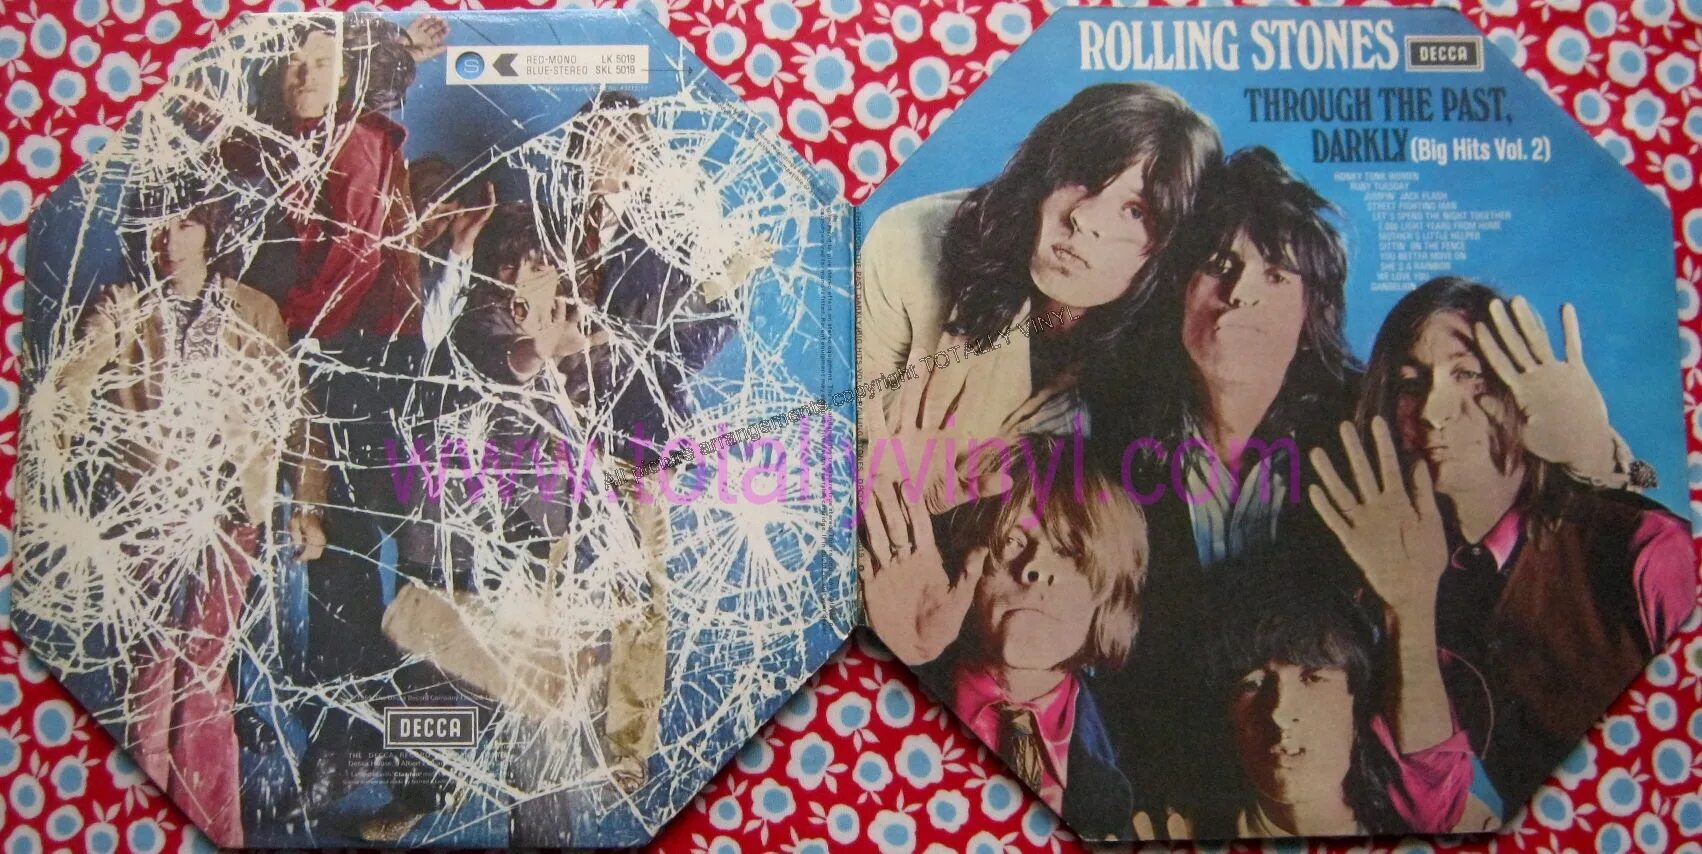 Rolling stones baby. Through the past, Darkly the Rolling Stones. Rolling Stones through the past Darkly big Hits Vol 2. Through the past, Darkly (big Hits Vol. 2). Big Hits the Rolling Stones.